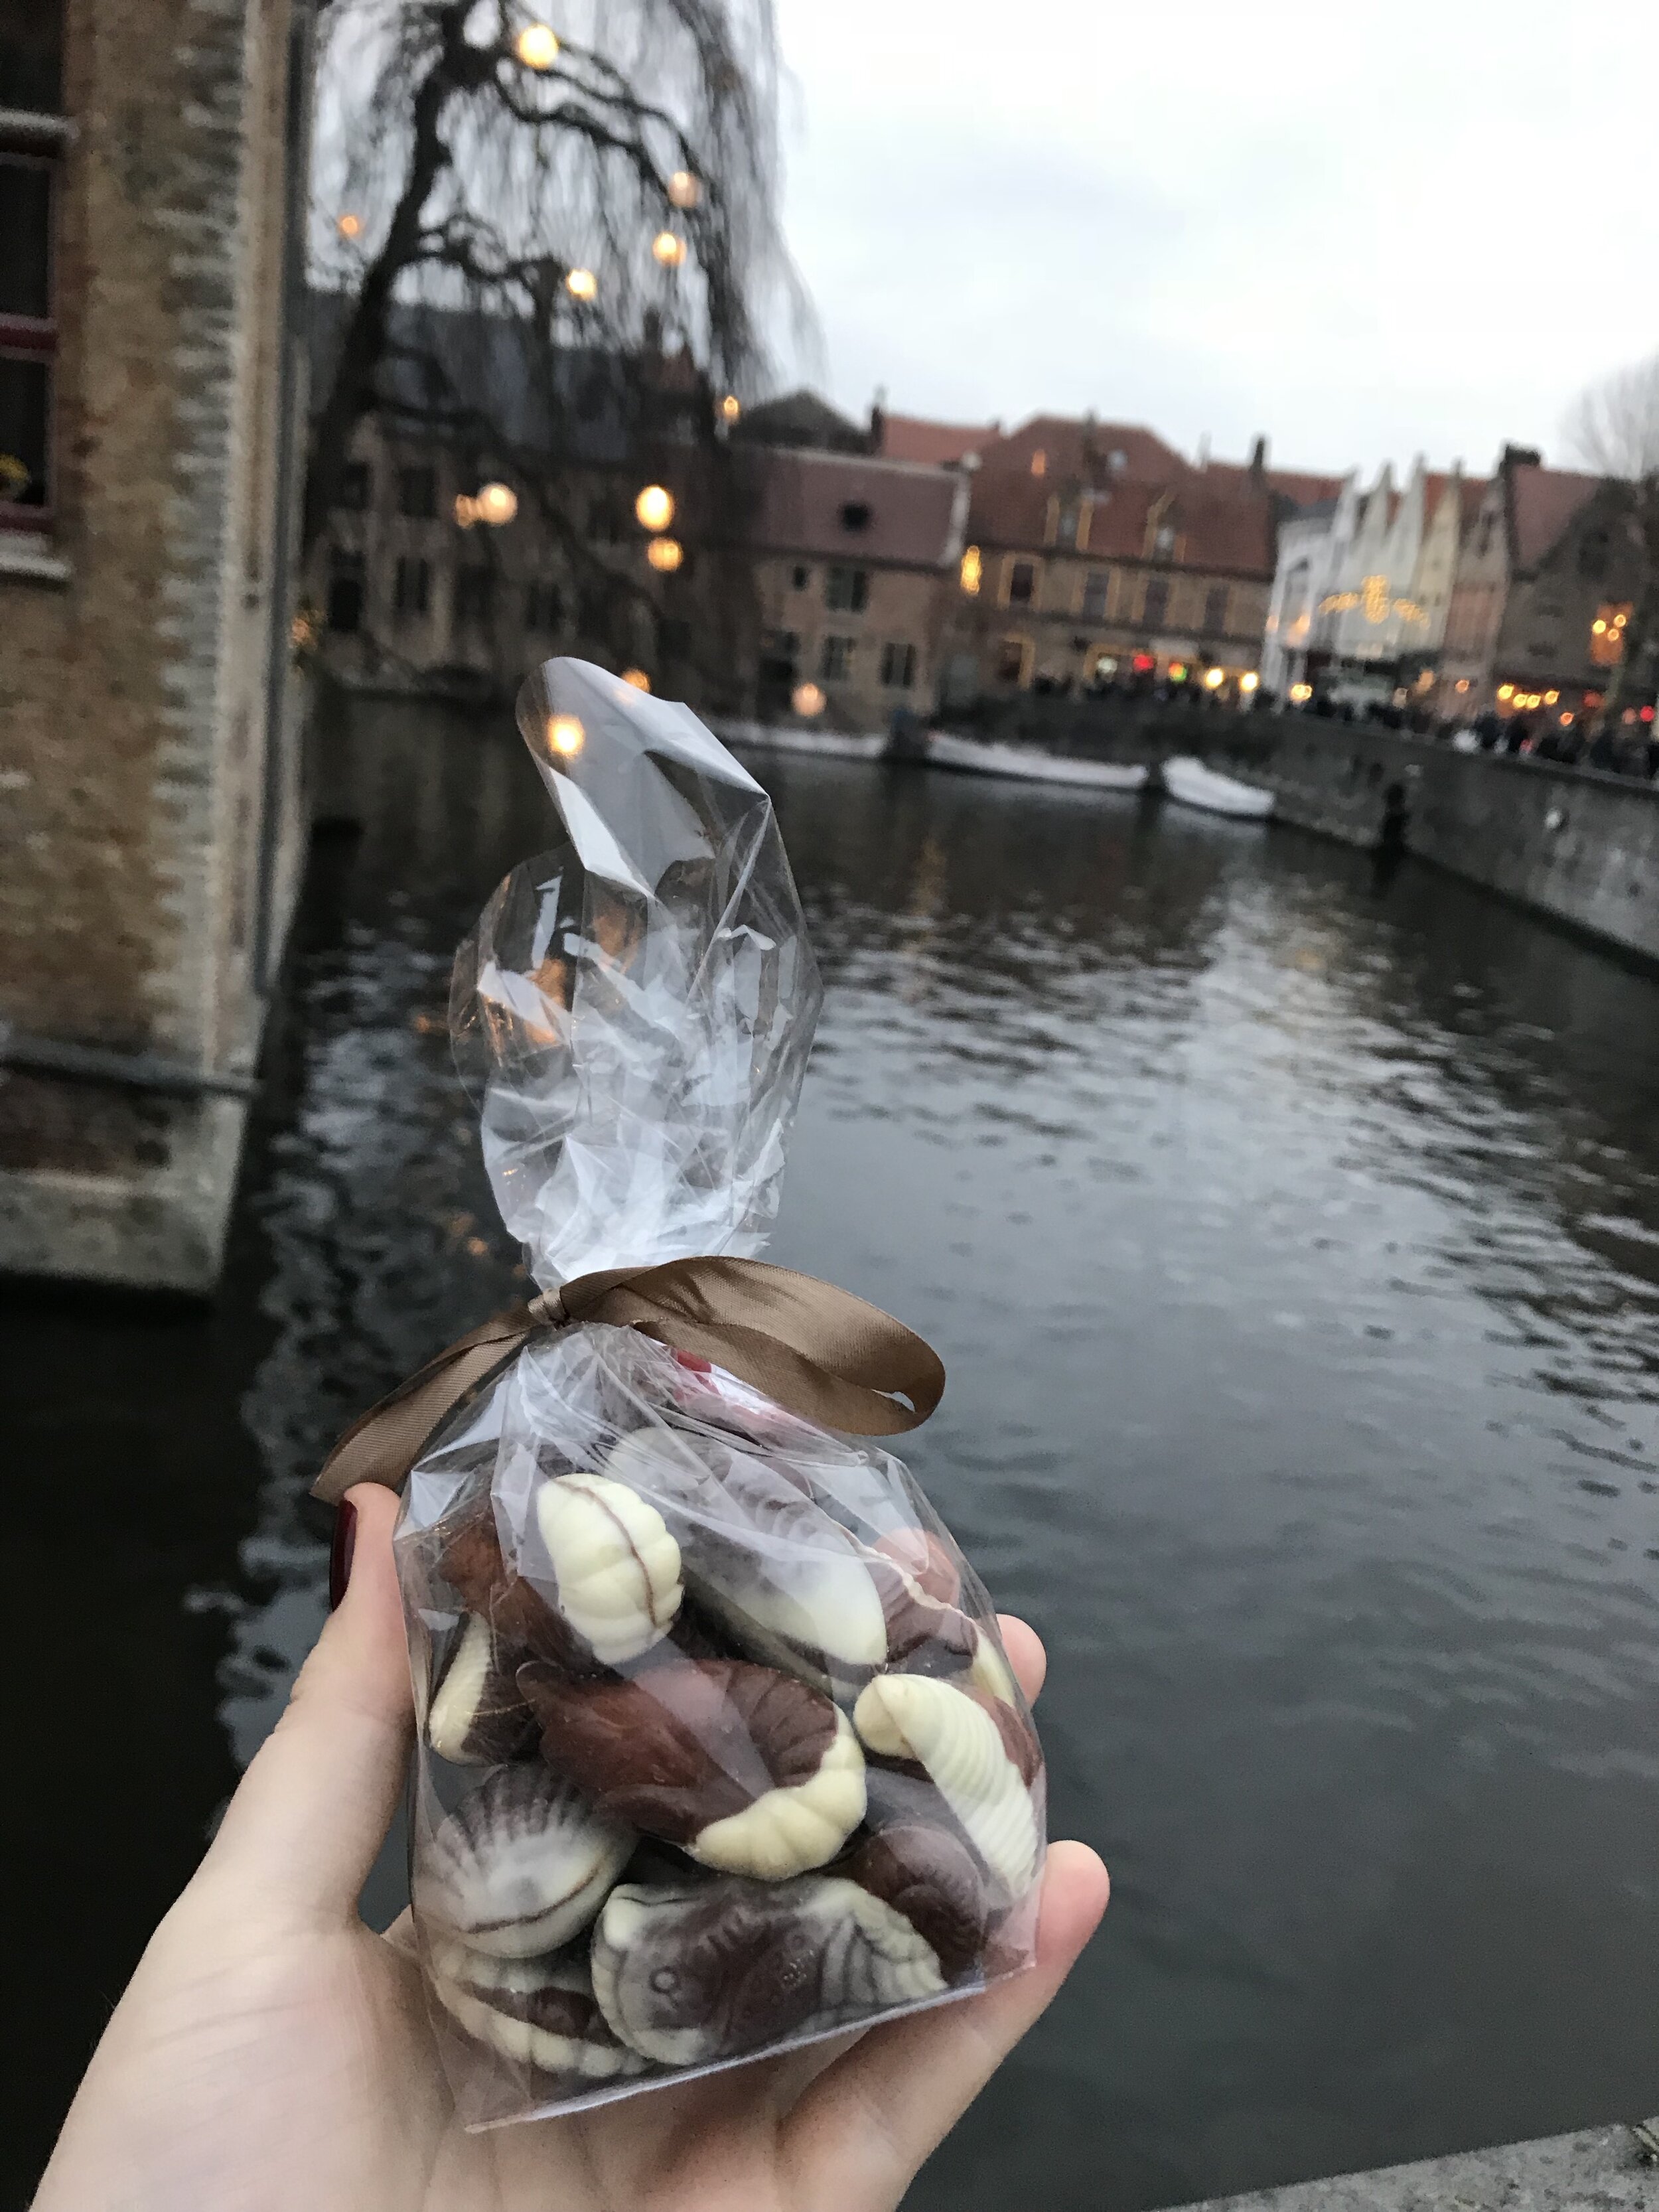 My favorite chocolate shells from a cute shop near Rozenhoedkaai!